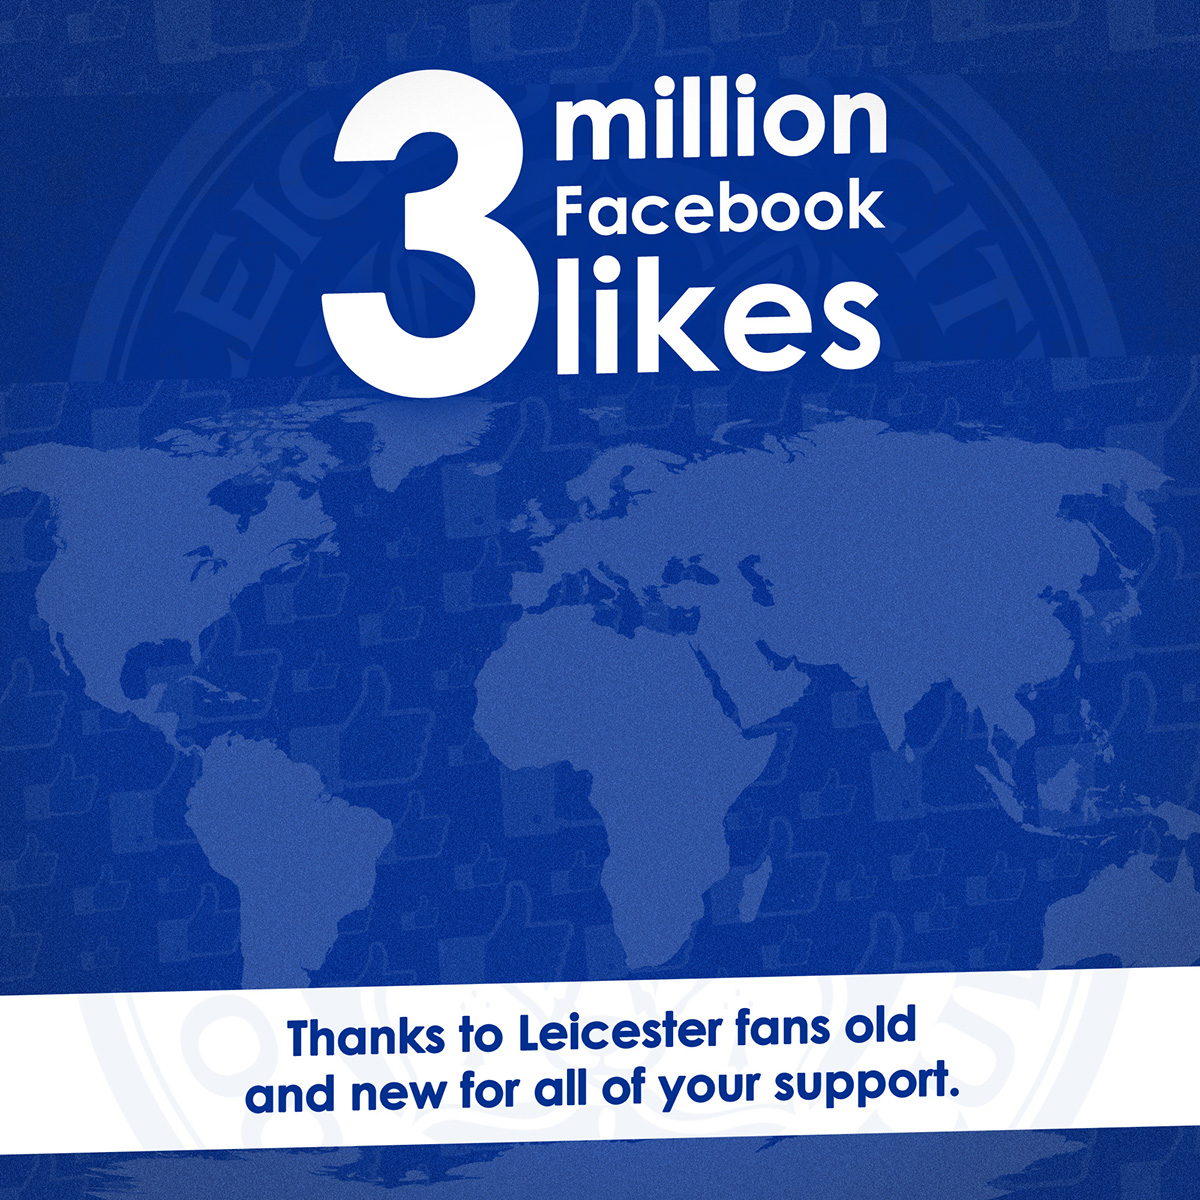 leicester city social media graphics remembrance day facebook gameface youtube header Claudio Ranieri Premier League soccer football